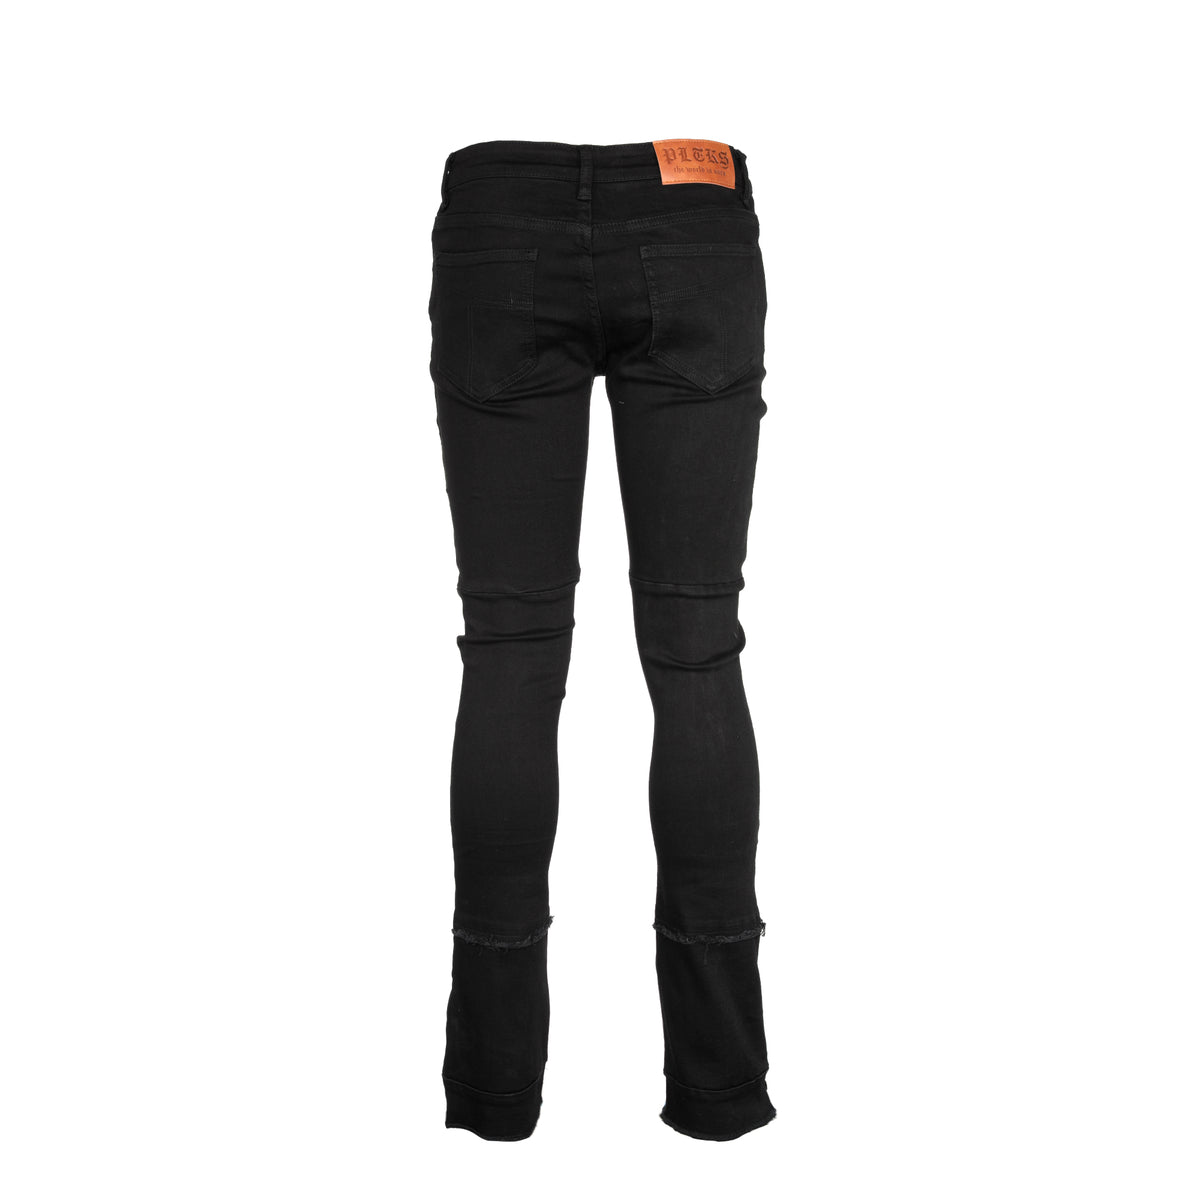 Foreign Brands Bruce 502 Men's Flared Skinny Black Jean - SIZE Boutique